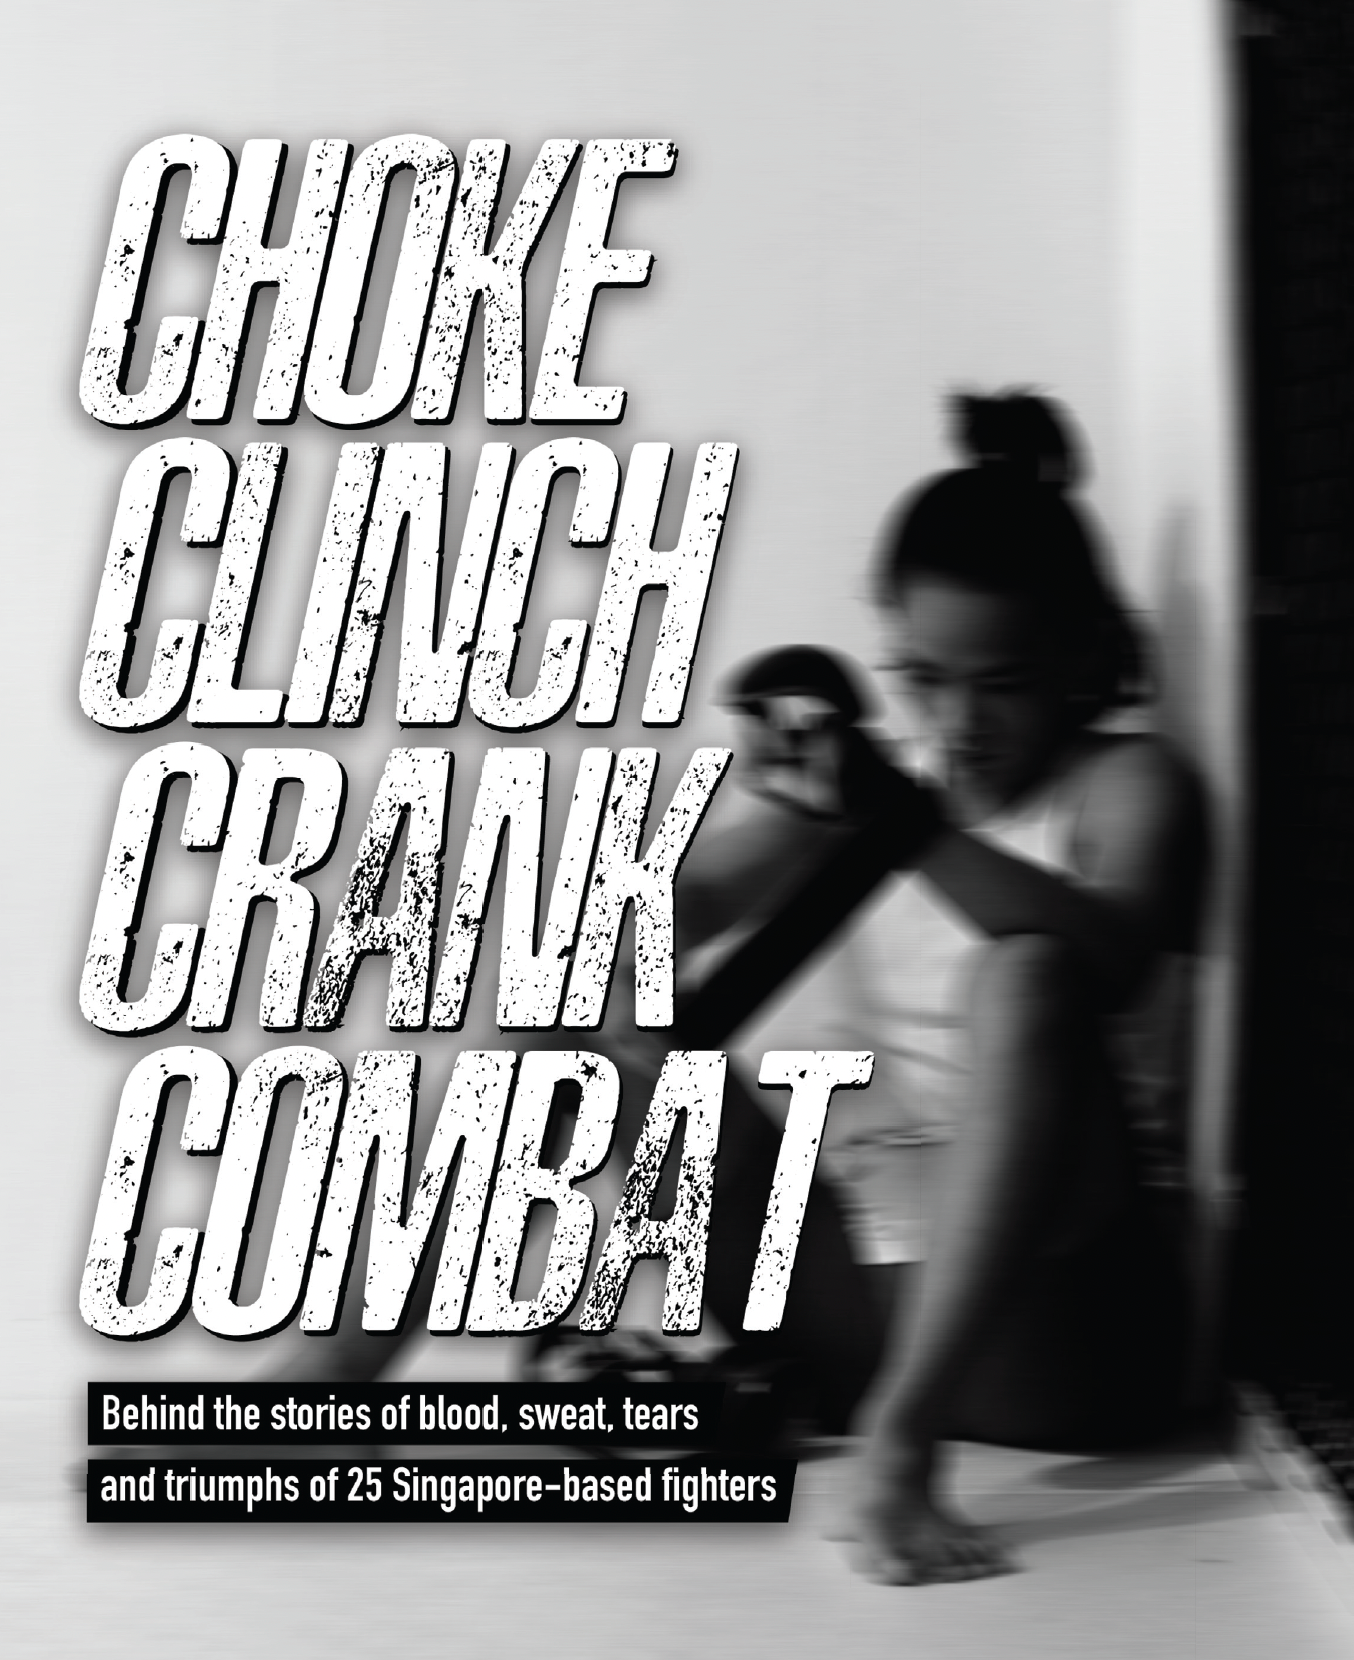 Choke Clinch Crank Combat